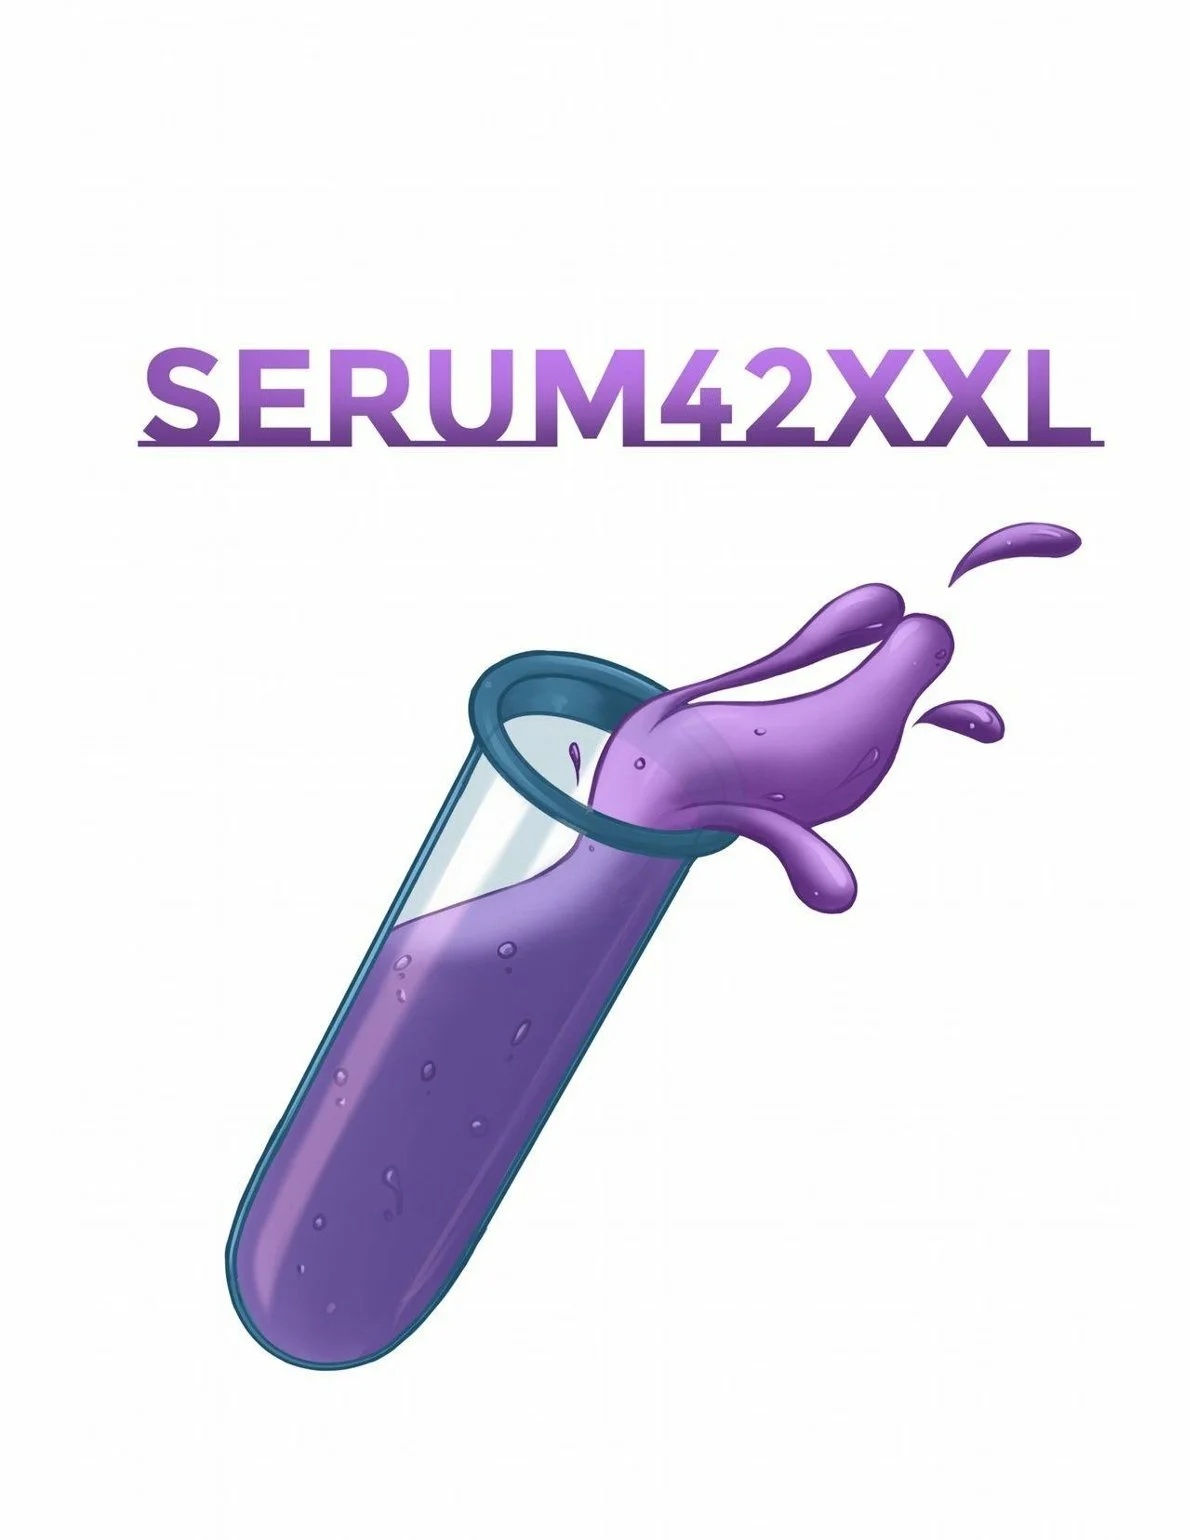 Serum42XXL (completo) - 53